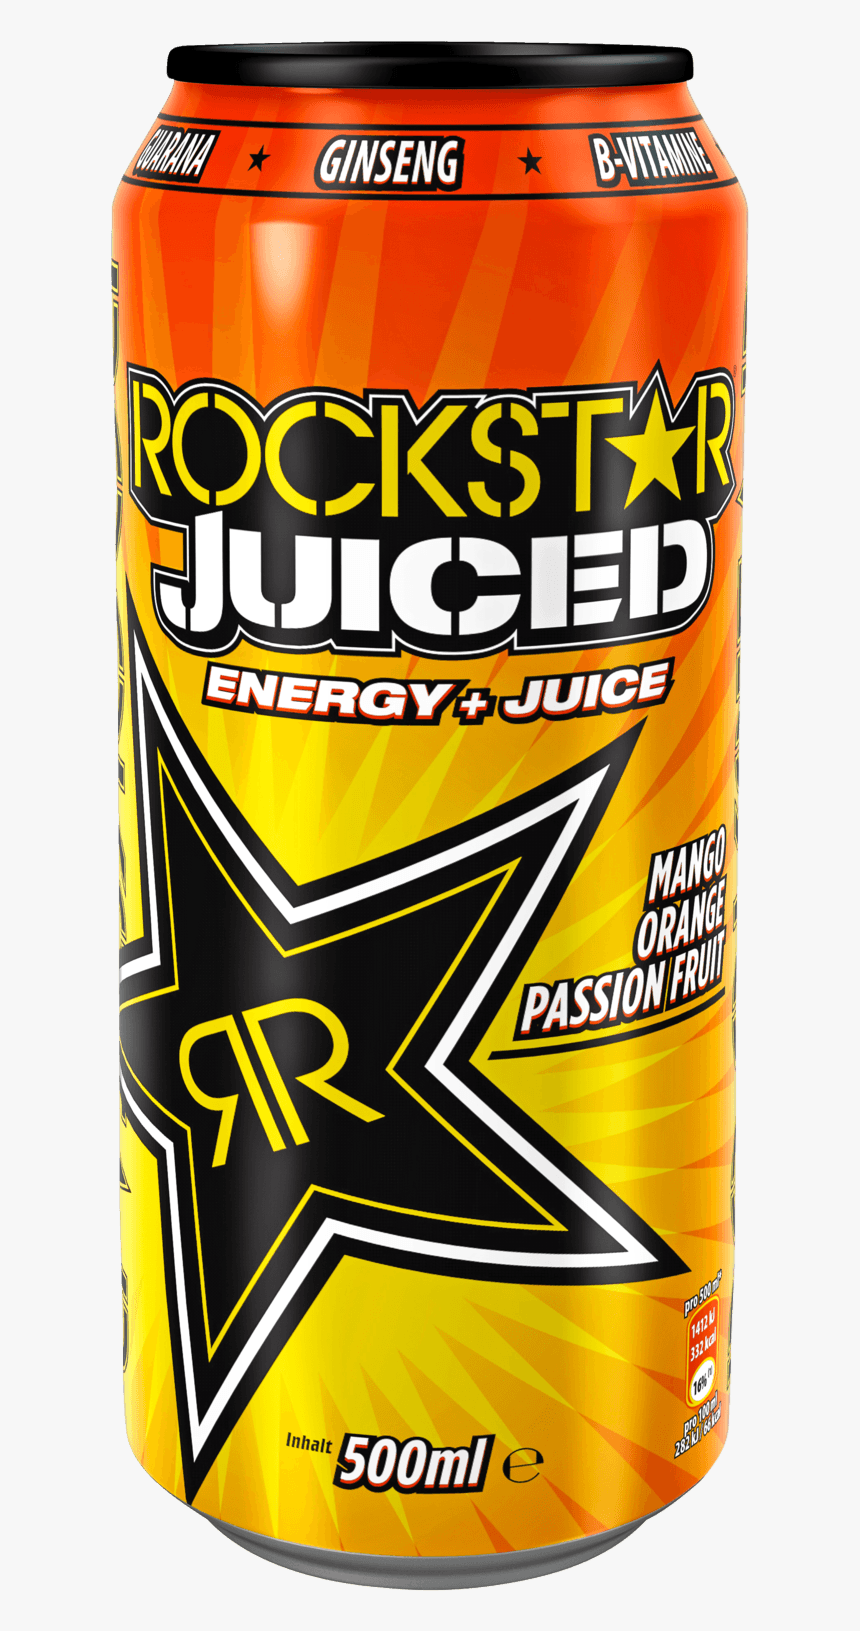 Rockstar Juiced Energy Juice Mango Orange Passion Fruit - Snack, HD Png Download, Free Download